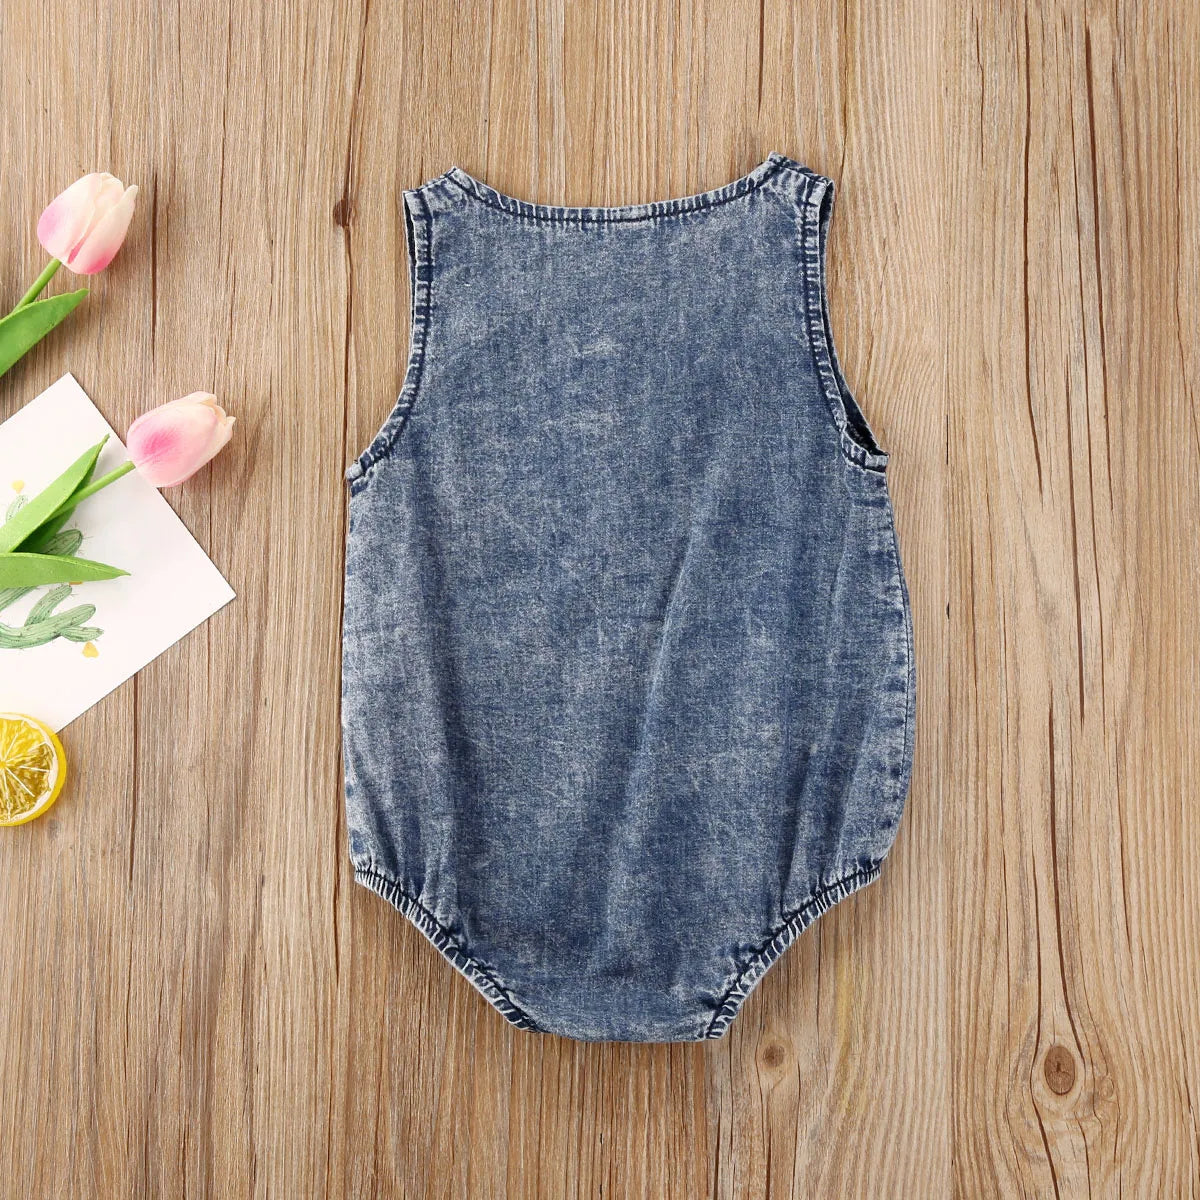 Unisex Sleeveless Button Pocket Cute Denim Rompers by Baby Minaj Cruz